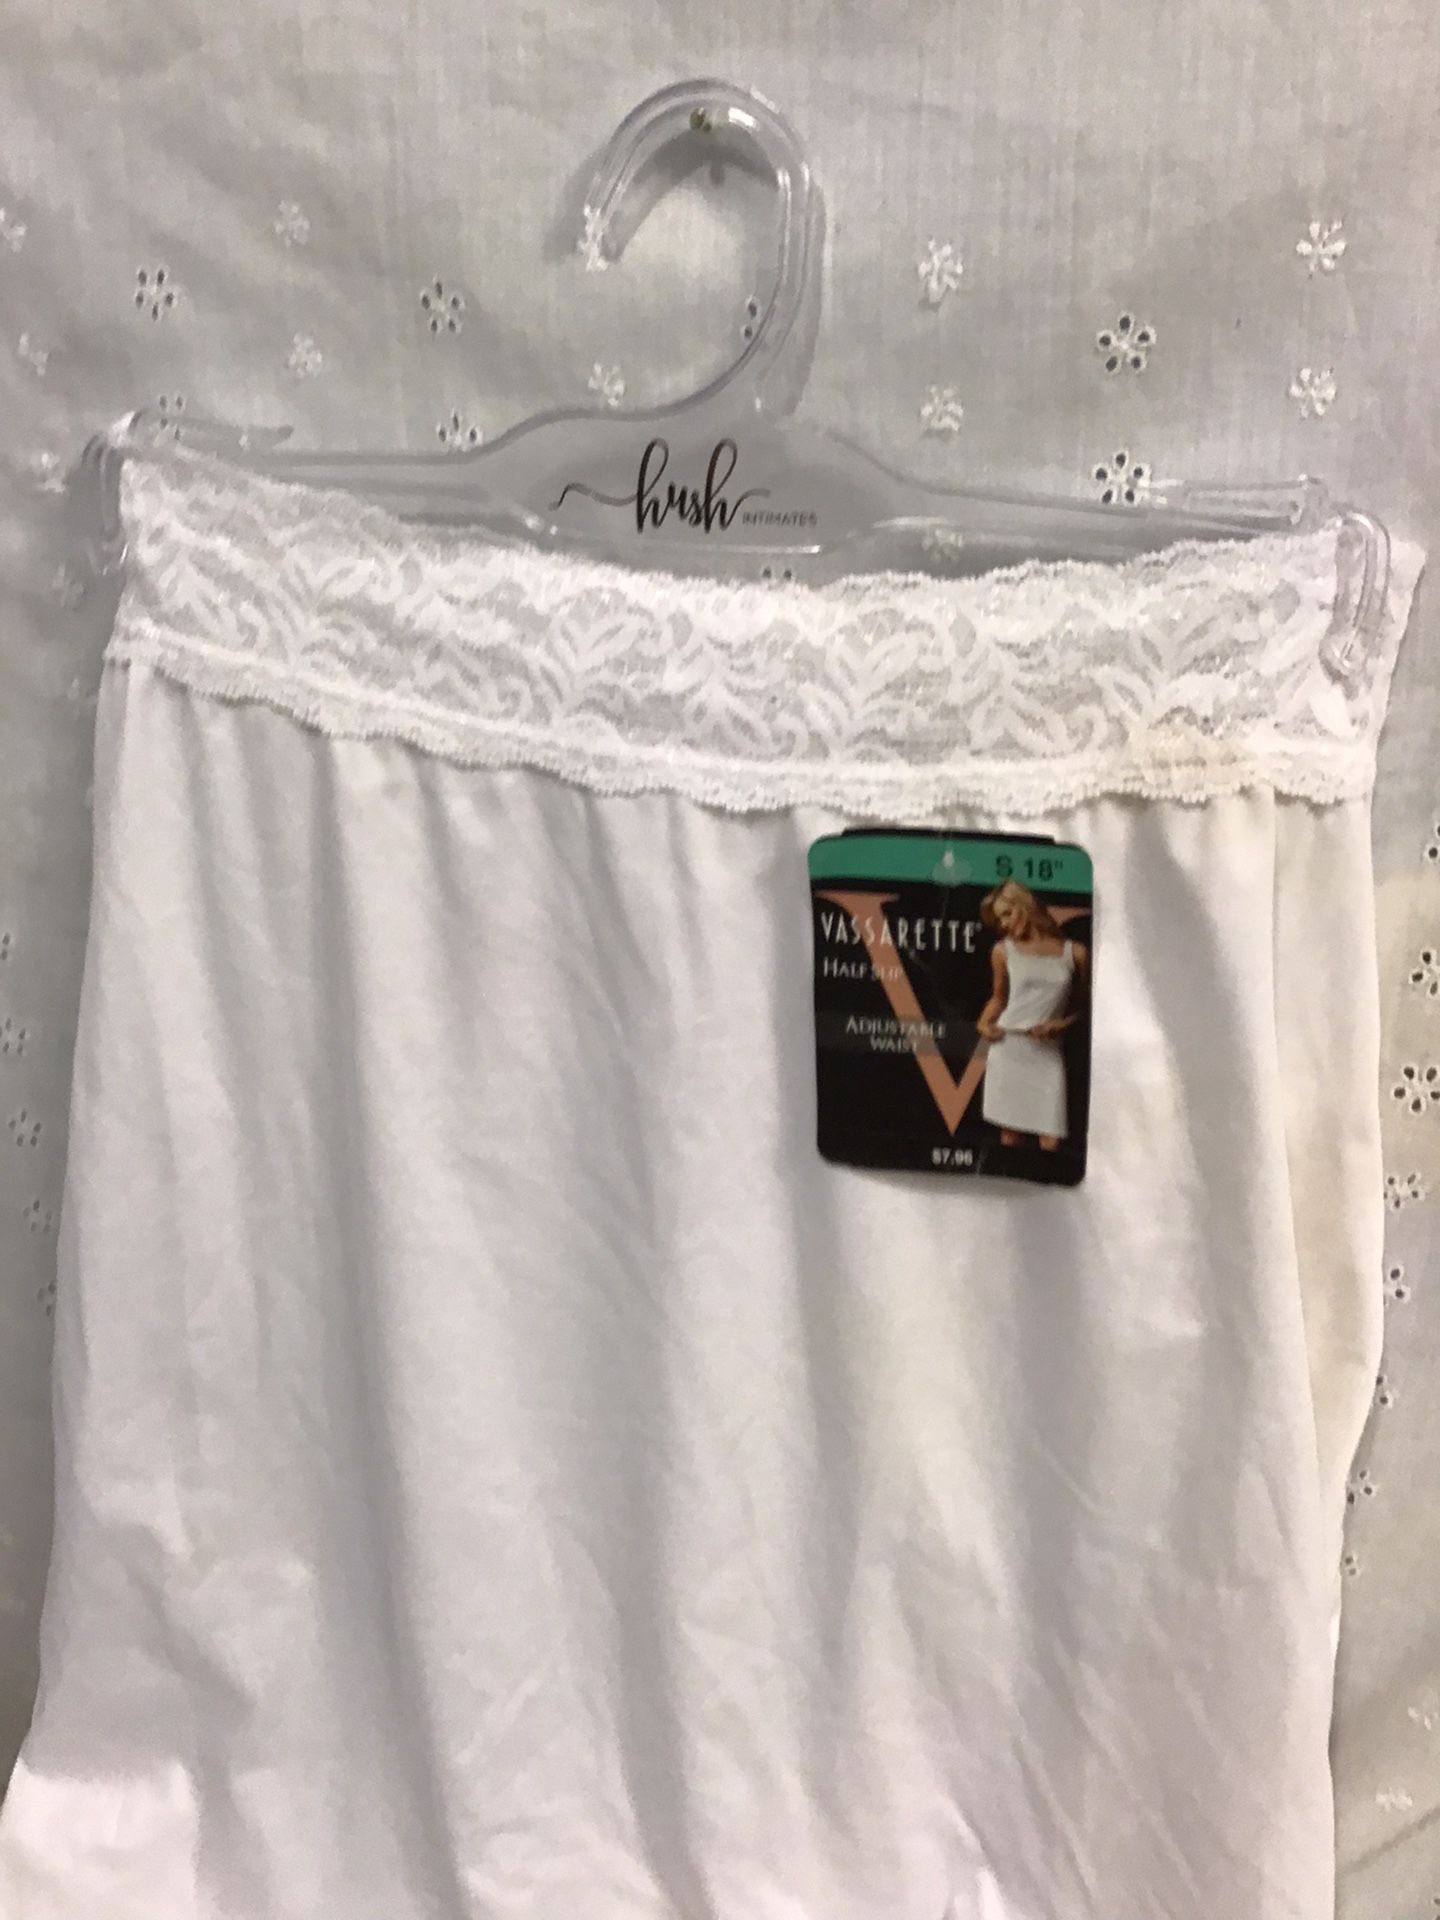 VASSARETTE Half Slip S 18”, SMART Sexy Thong Size: M, XL, ( 8 ) for Sale in  San Bernardino, CA - OfferUp